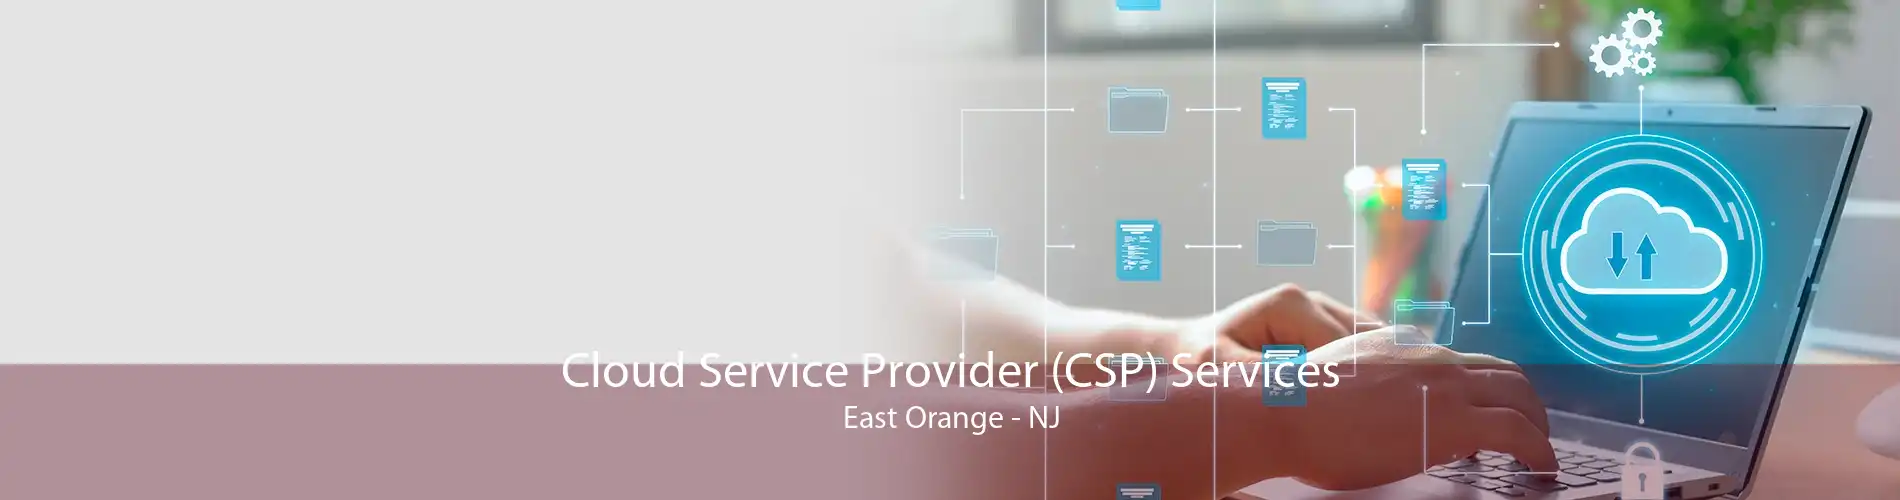 Cloud Service Provider (CSP) Services East Orange - NJ